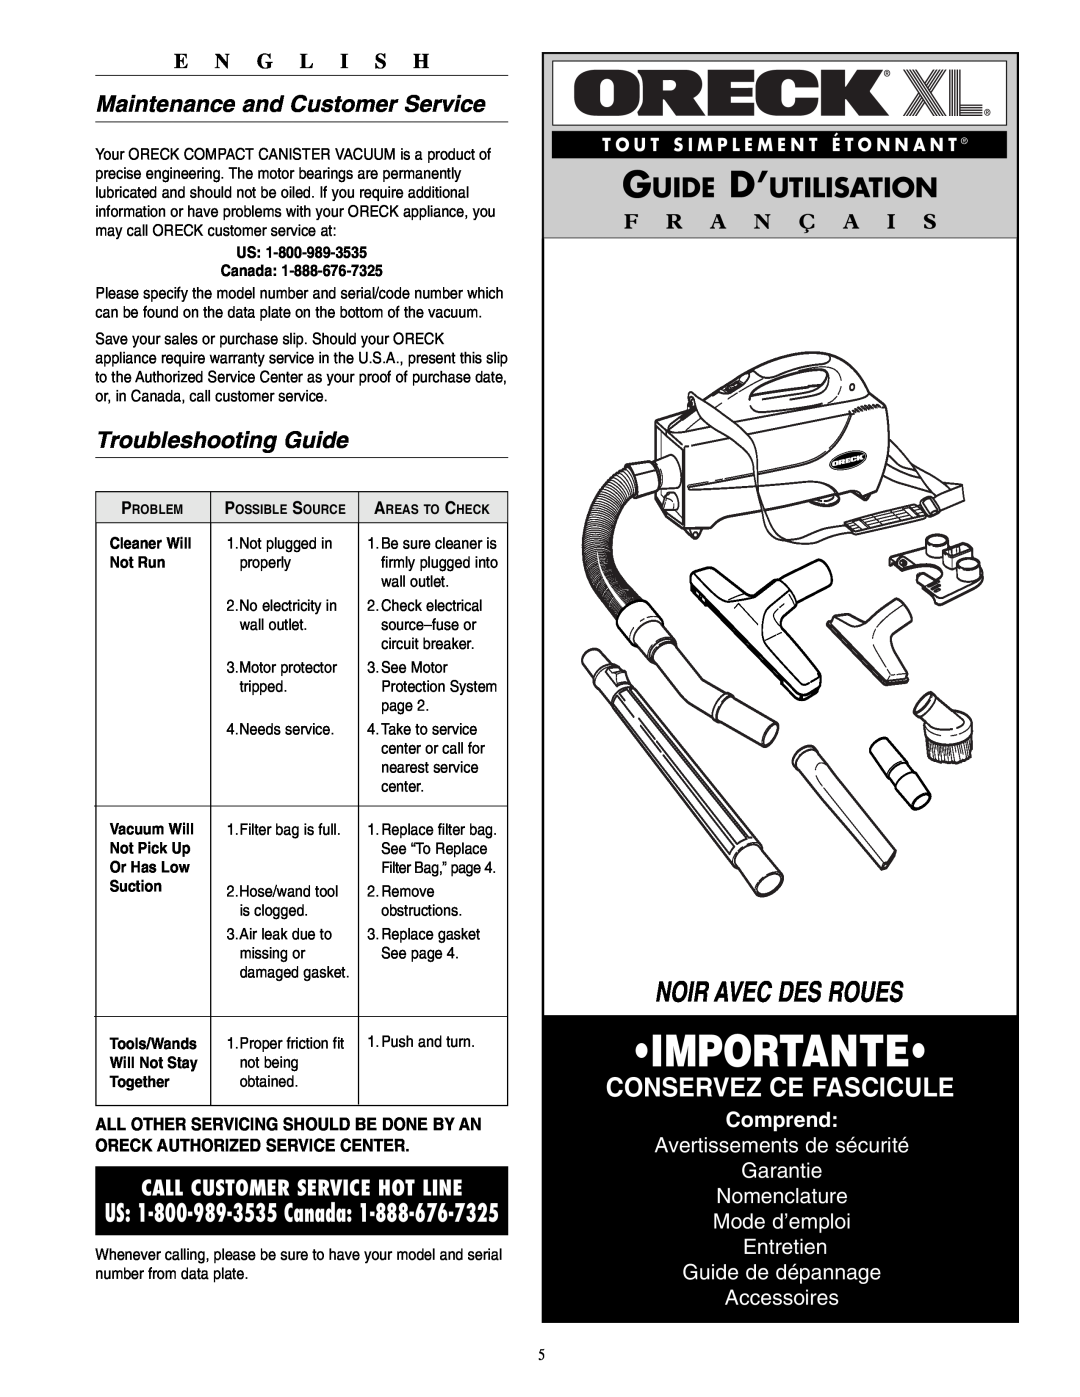 Oreck BB1100 Guide D’Utilisation, Conservez Ce Fascicule, Maintenance and Customer Service, Troubleshooting Guide, A N Ç A 